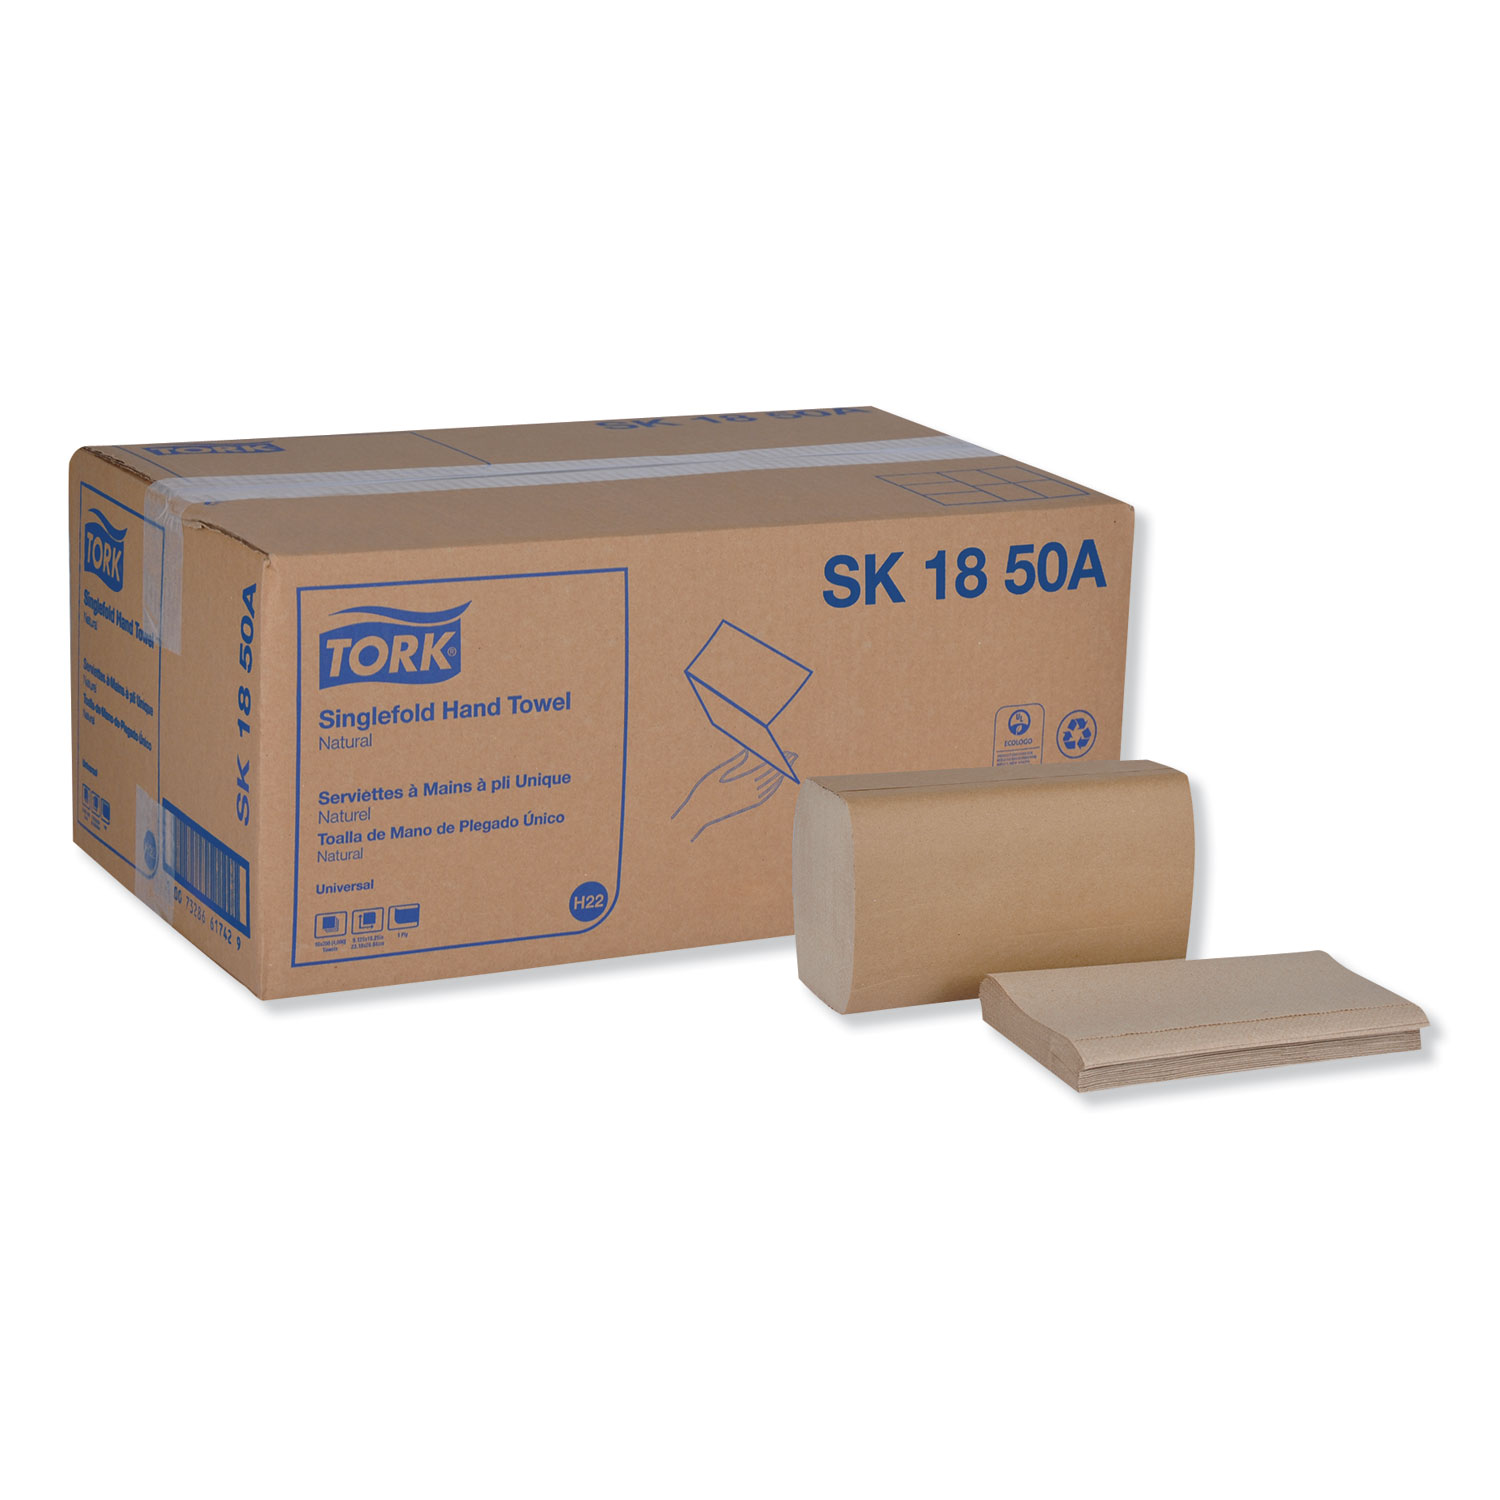  Tork SK1850A Universal Singlefold Hand Towel, 9.13 x 10.25, Natural, 250/Pack,16 Packs/Carton (TRKSK1850A) 